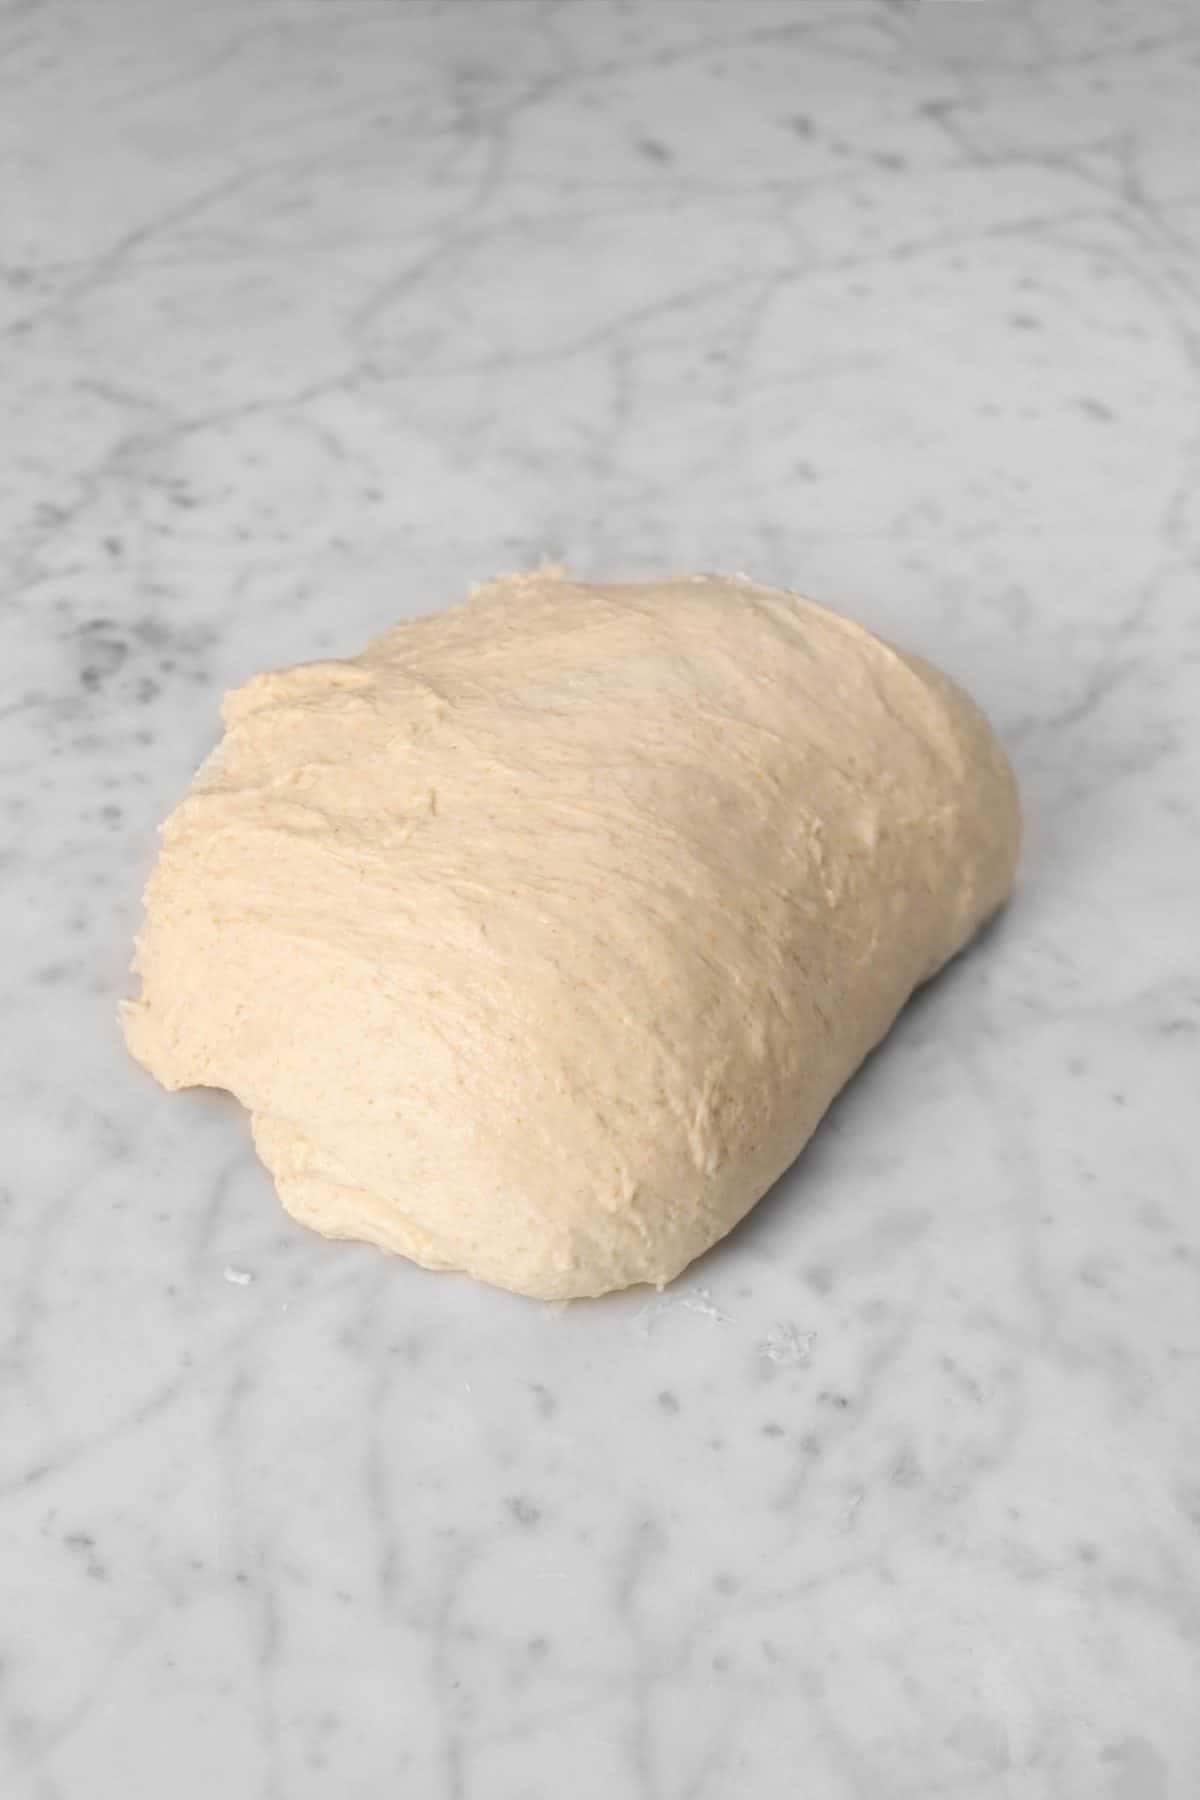 dough folded over in half upwards.